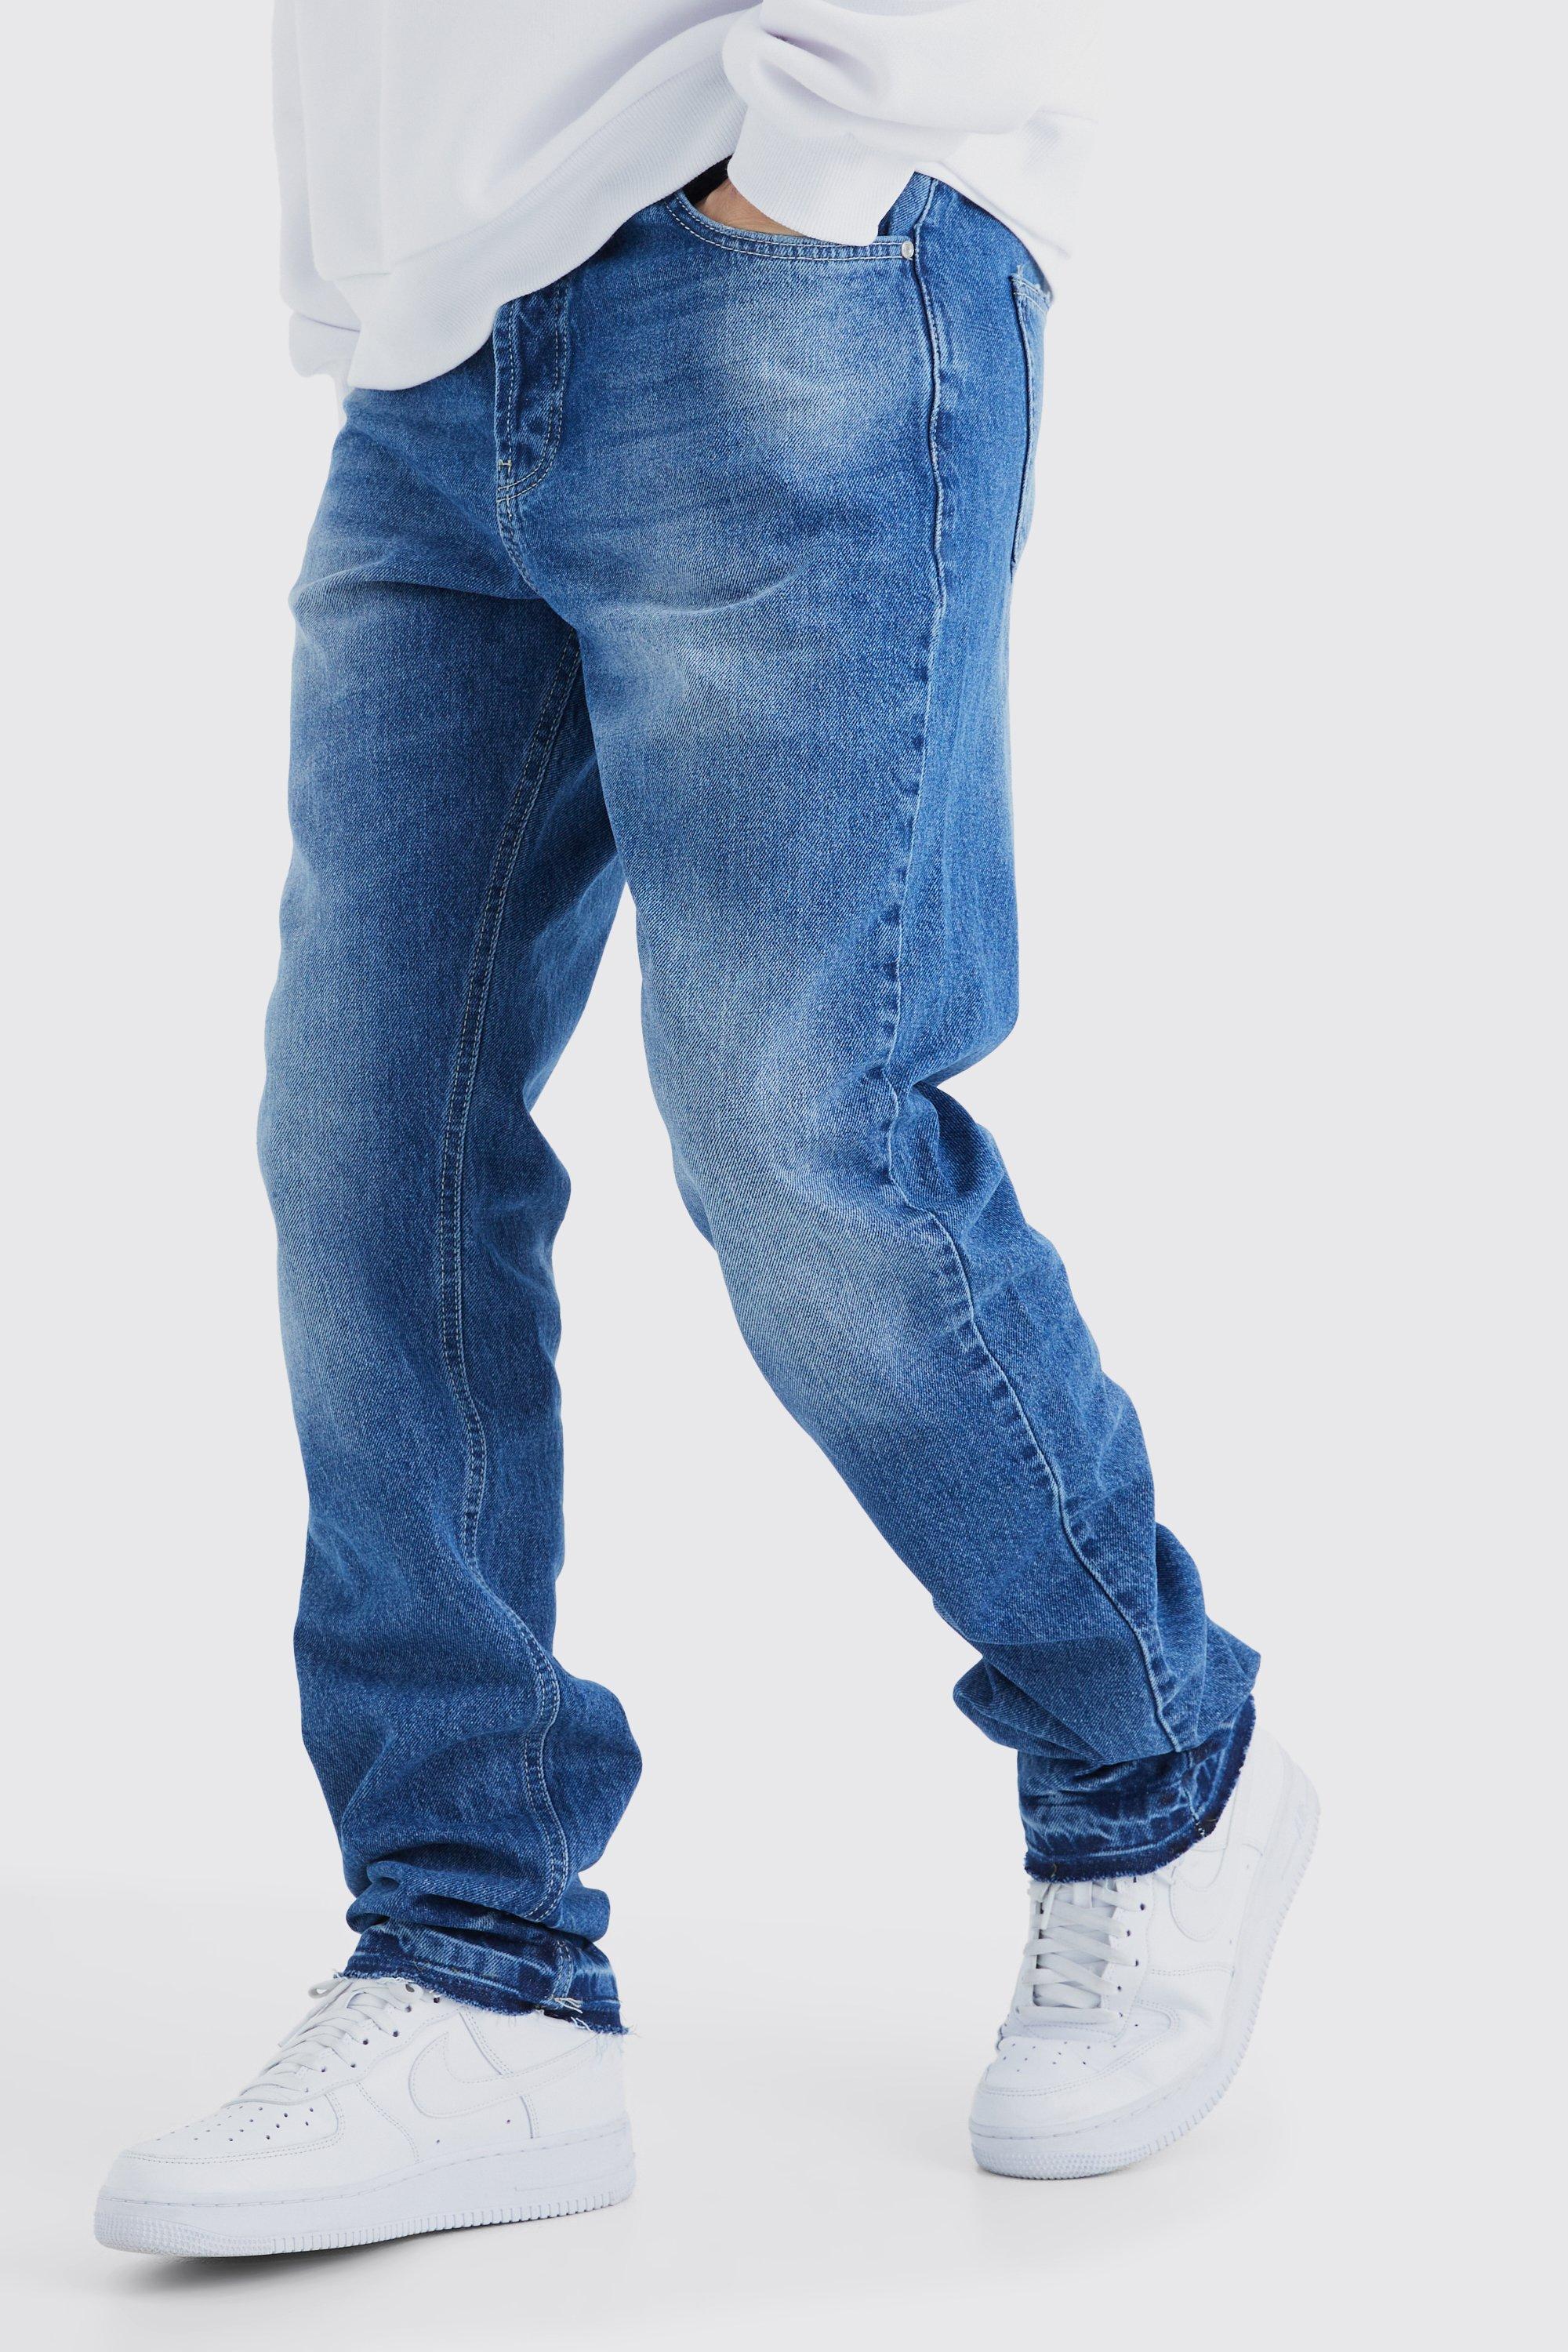 tall gerade jeans - mid blue - 32, mid blue